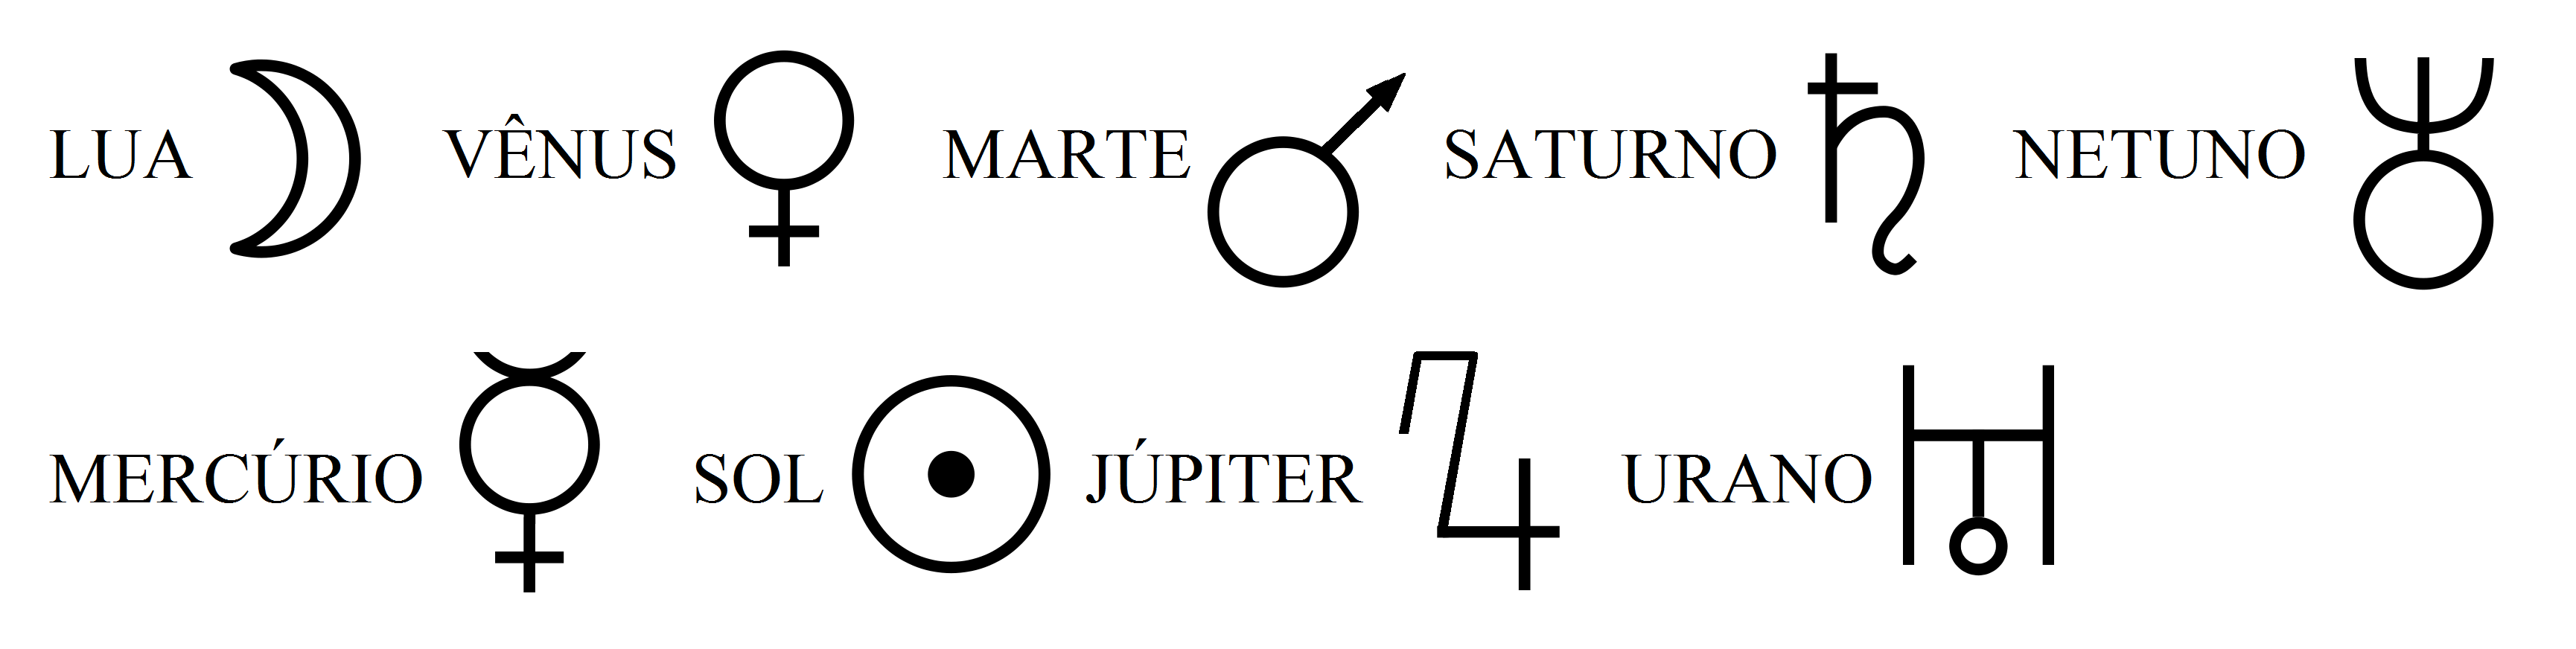 Planet Symbols